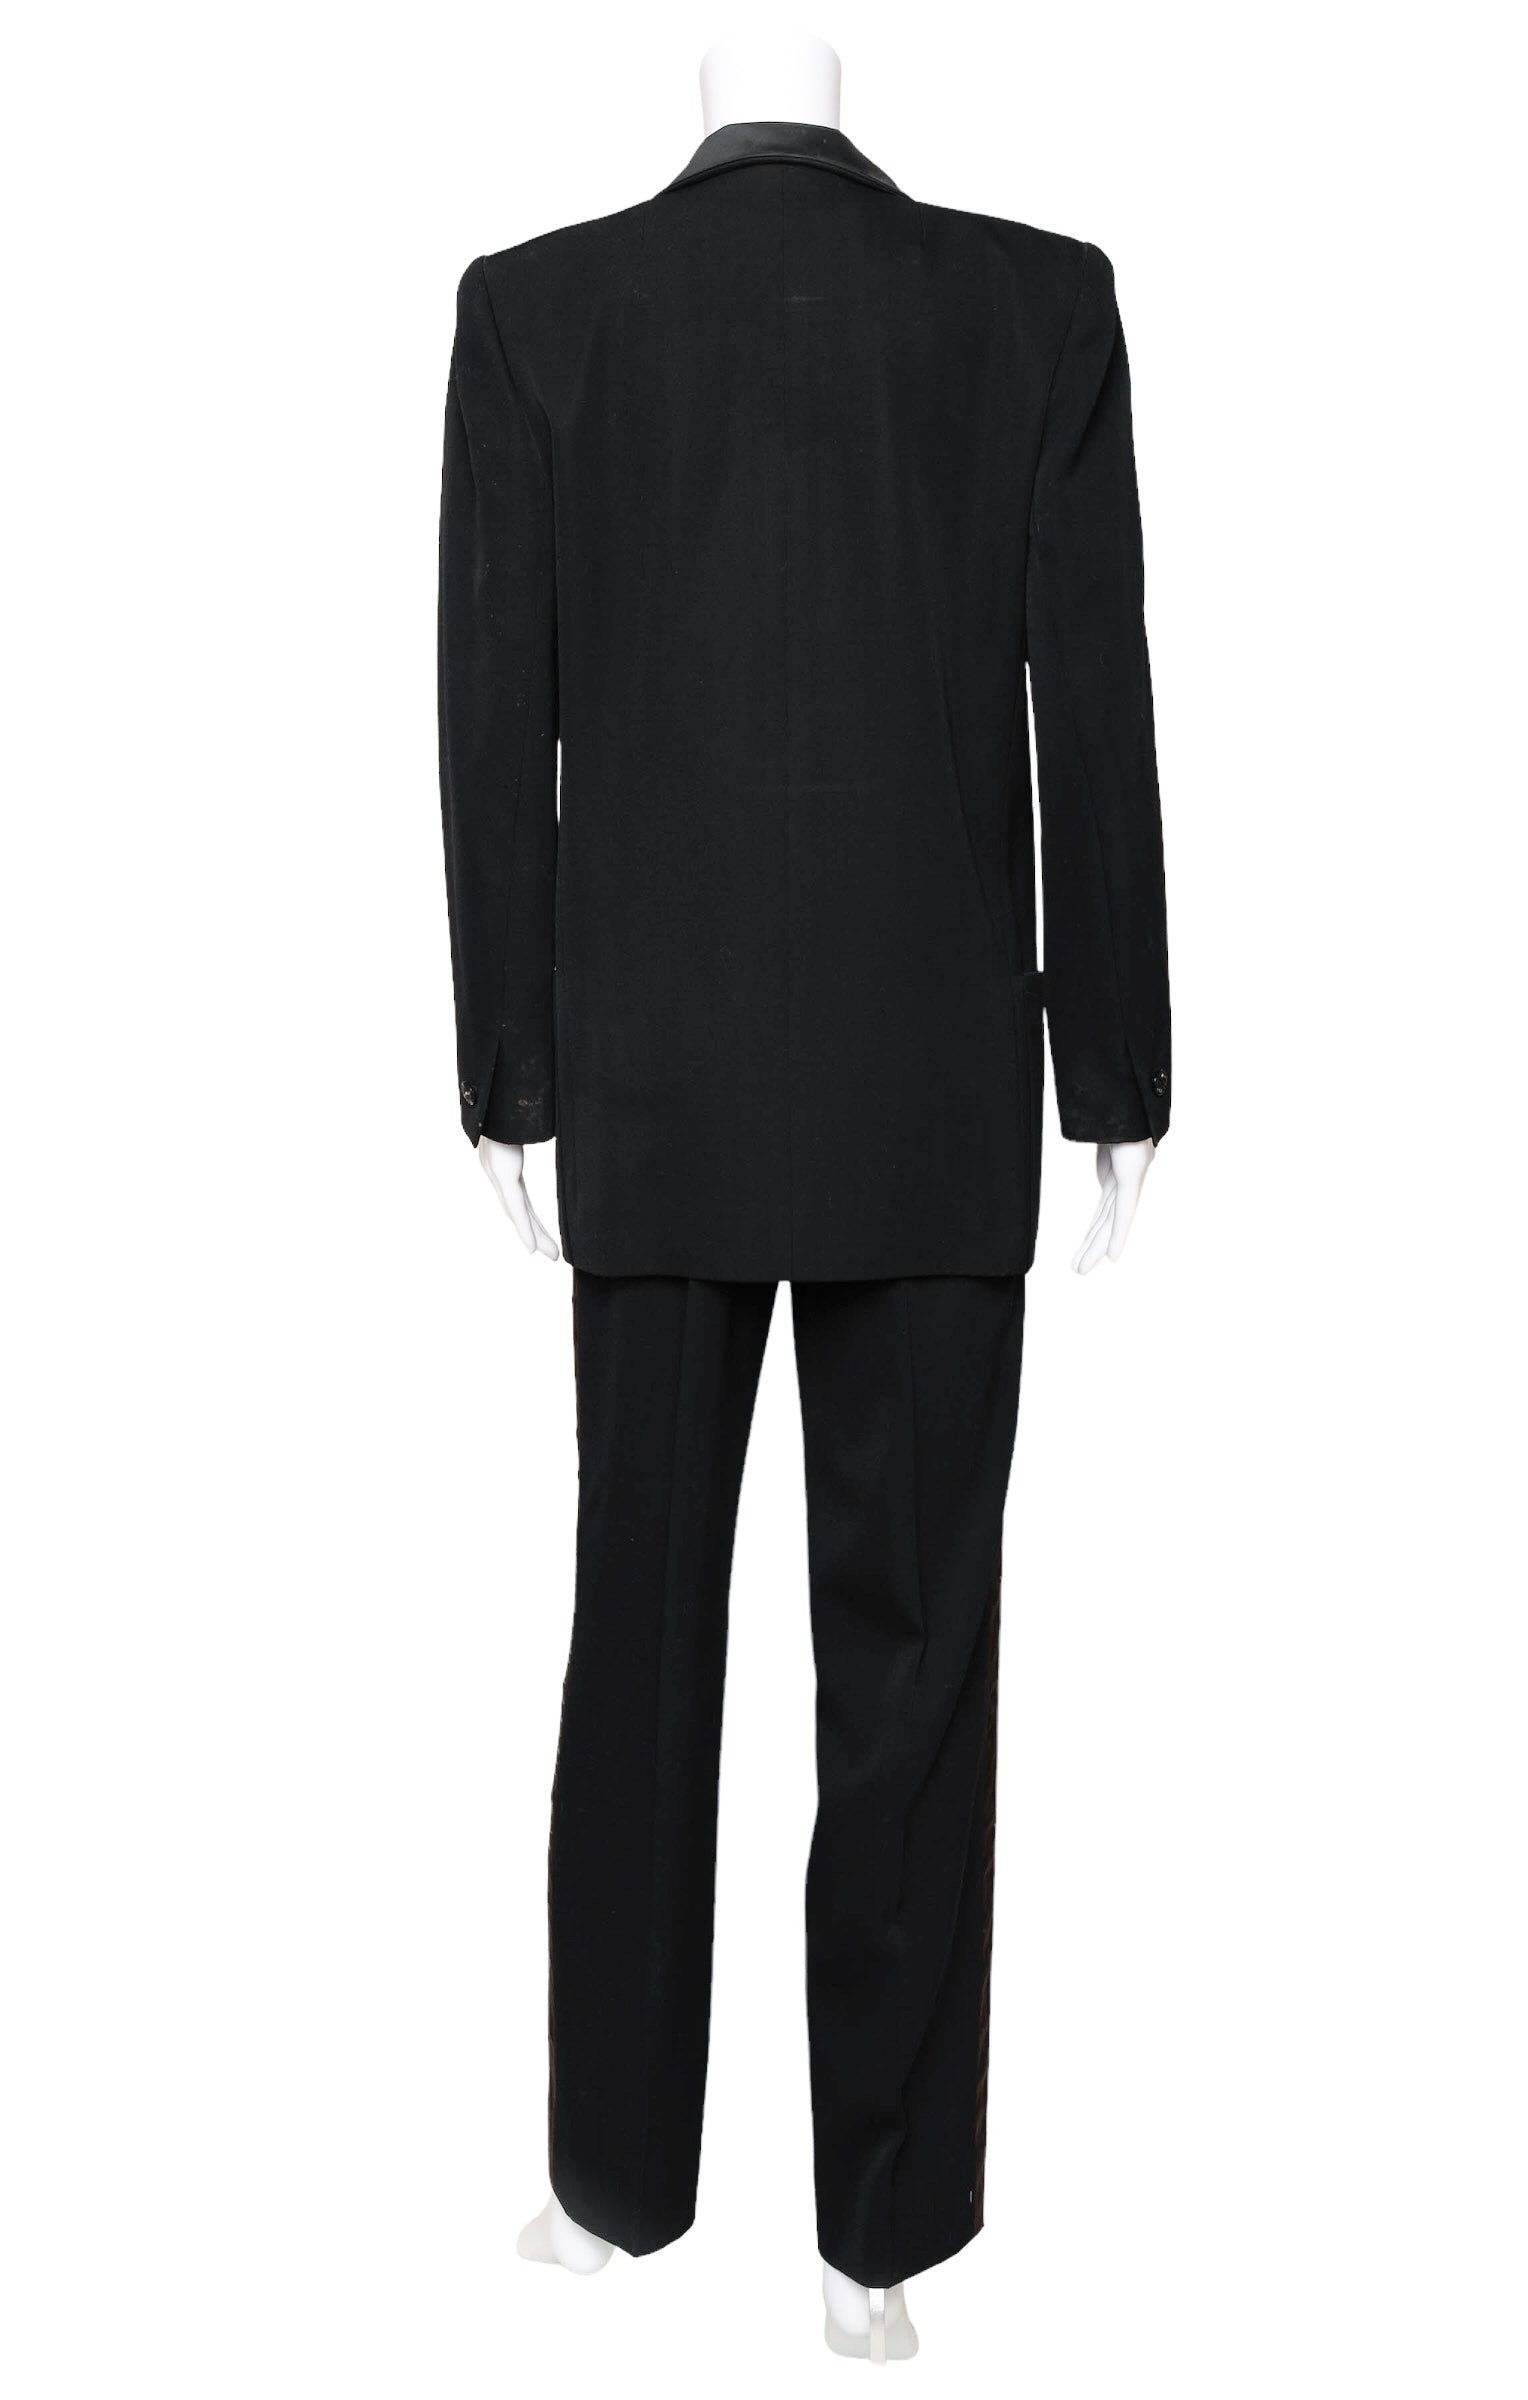 VINTAGE NINA RICCI (RARE) Suit Size: Jacket - No size tags, fits like US 2-4 Pants - No size tags, fits like XXS